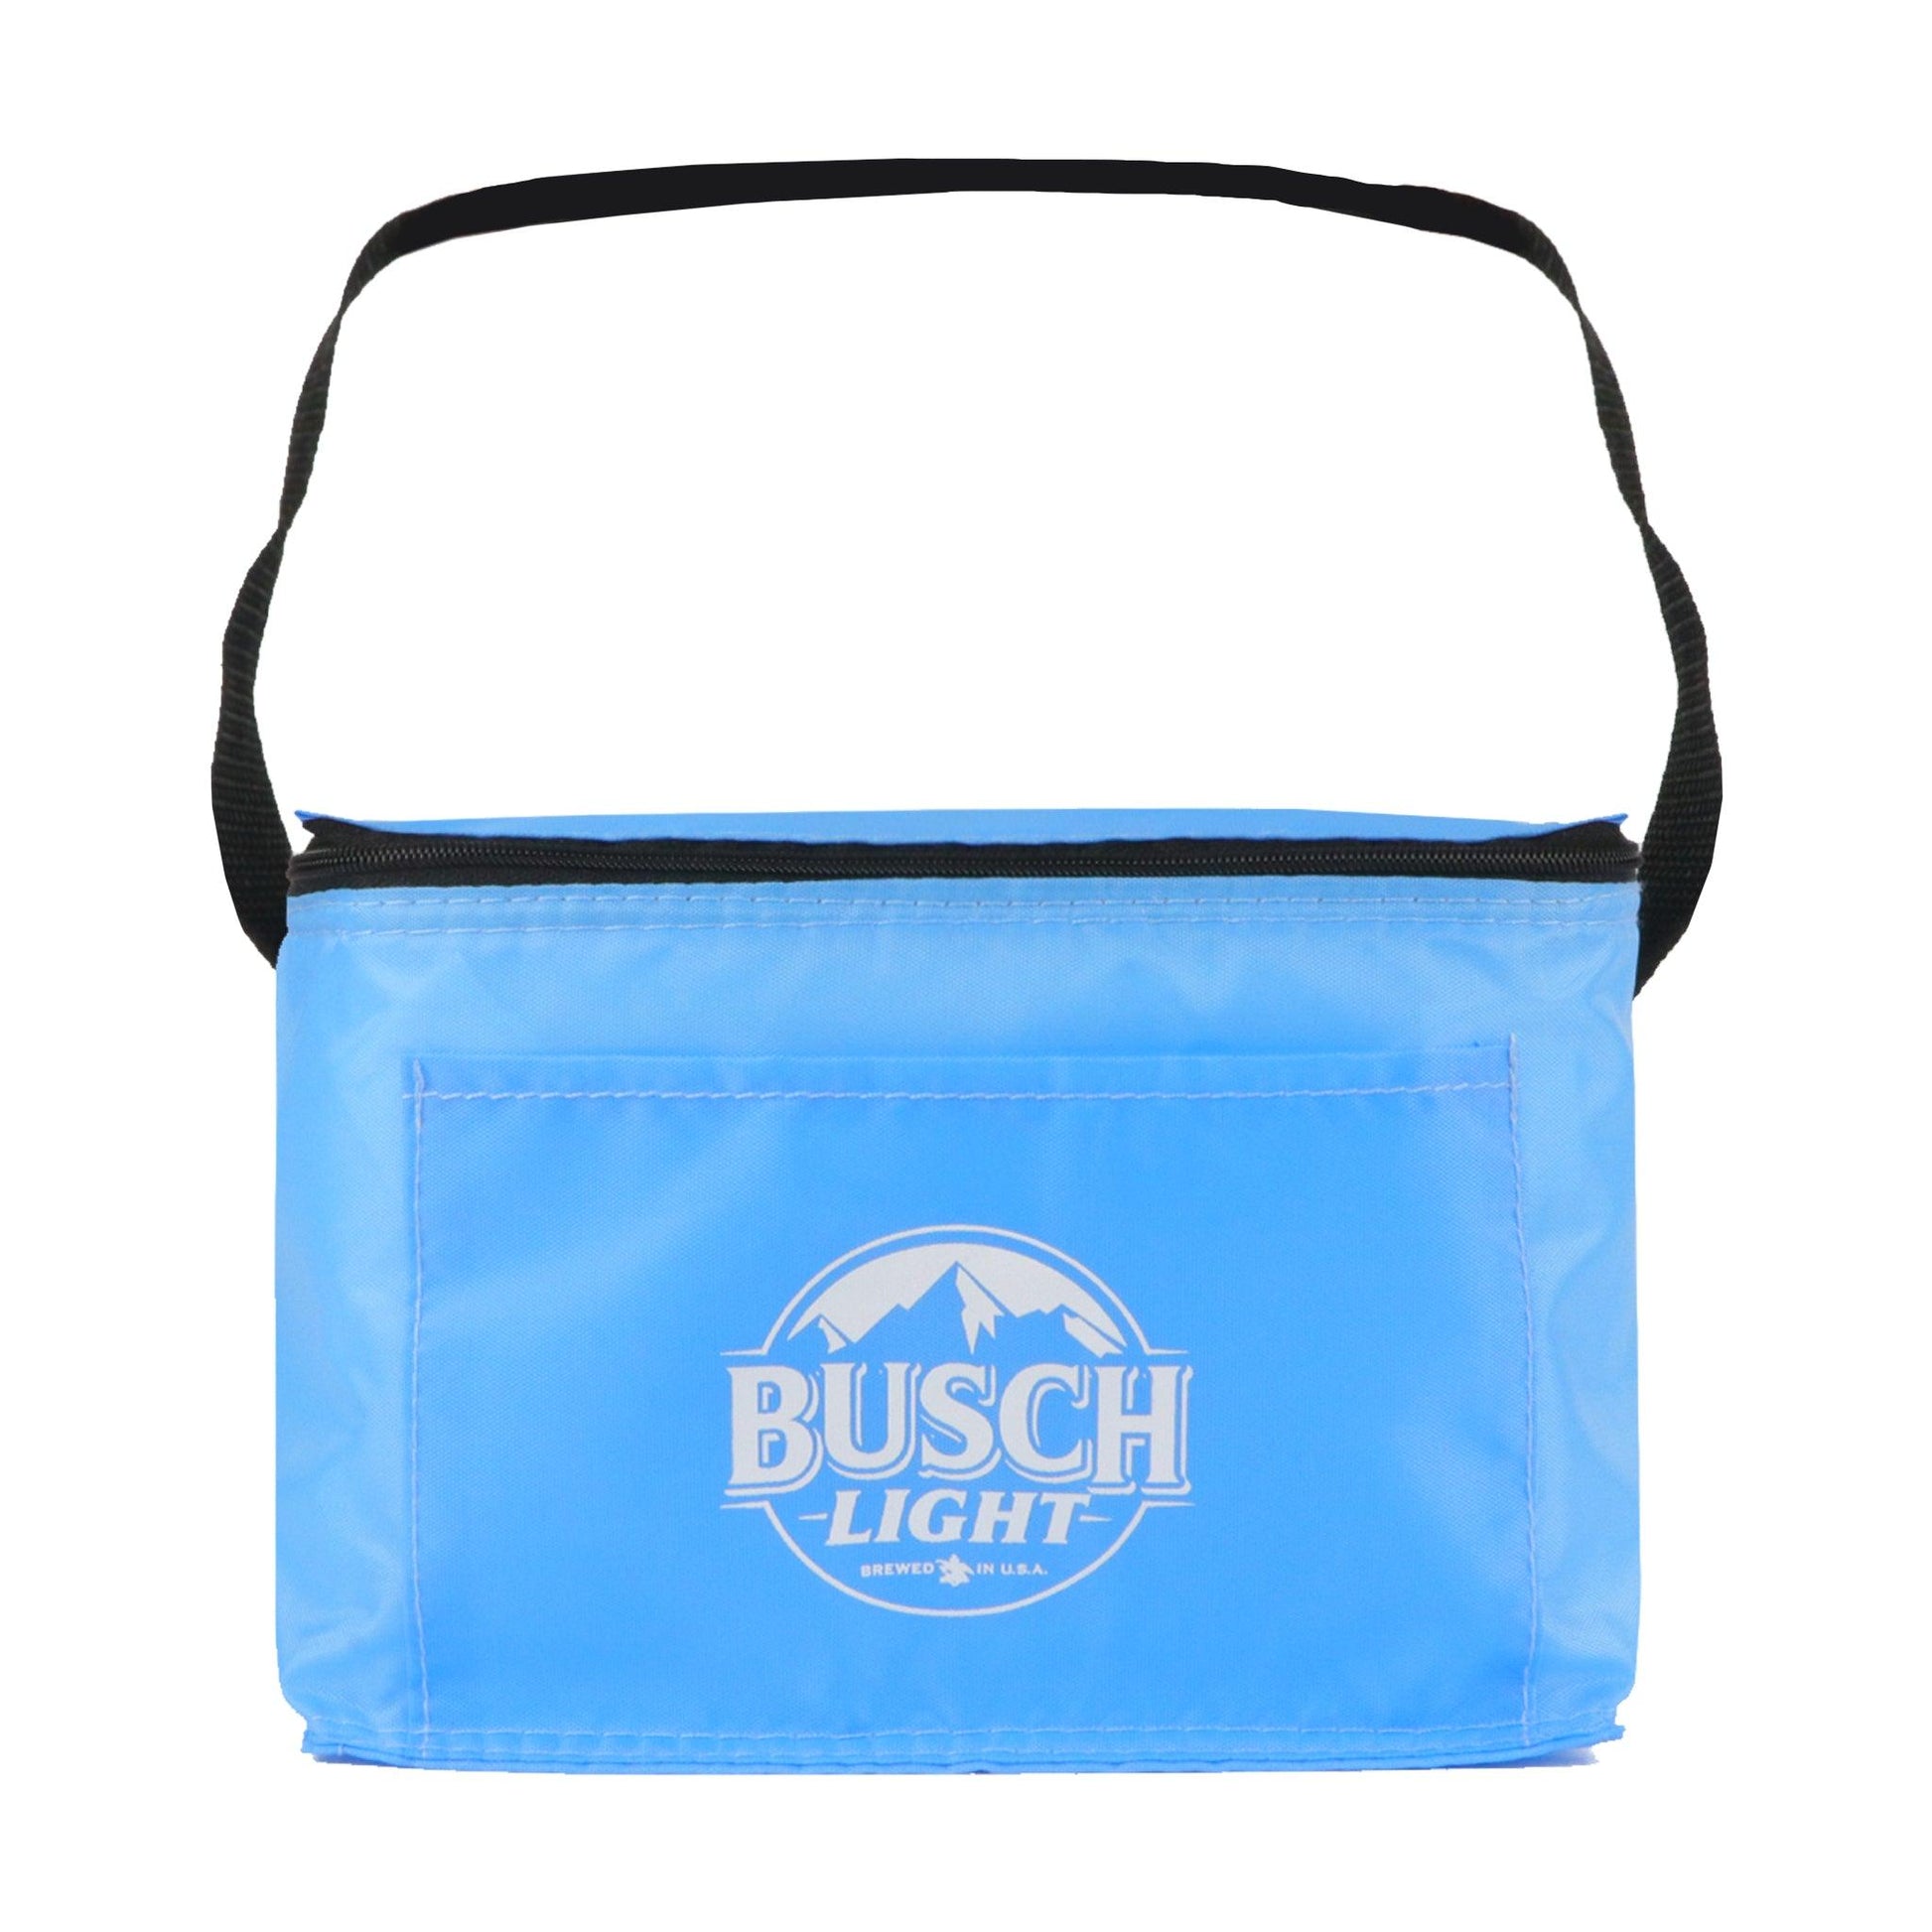 Busch light blue top zip cooler with logo on front 